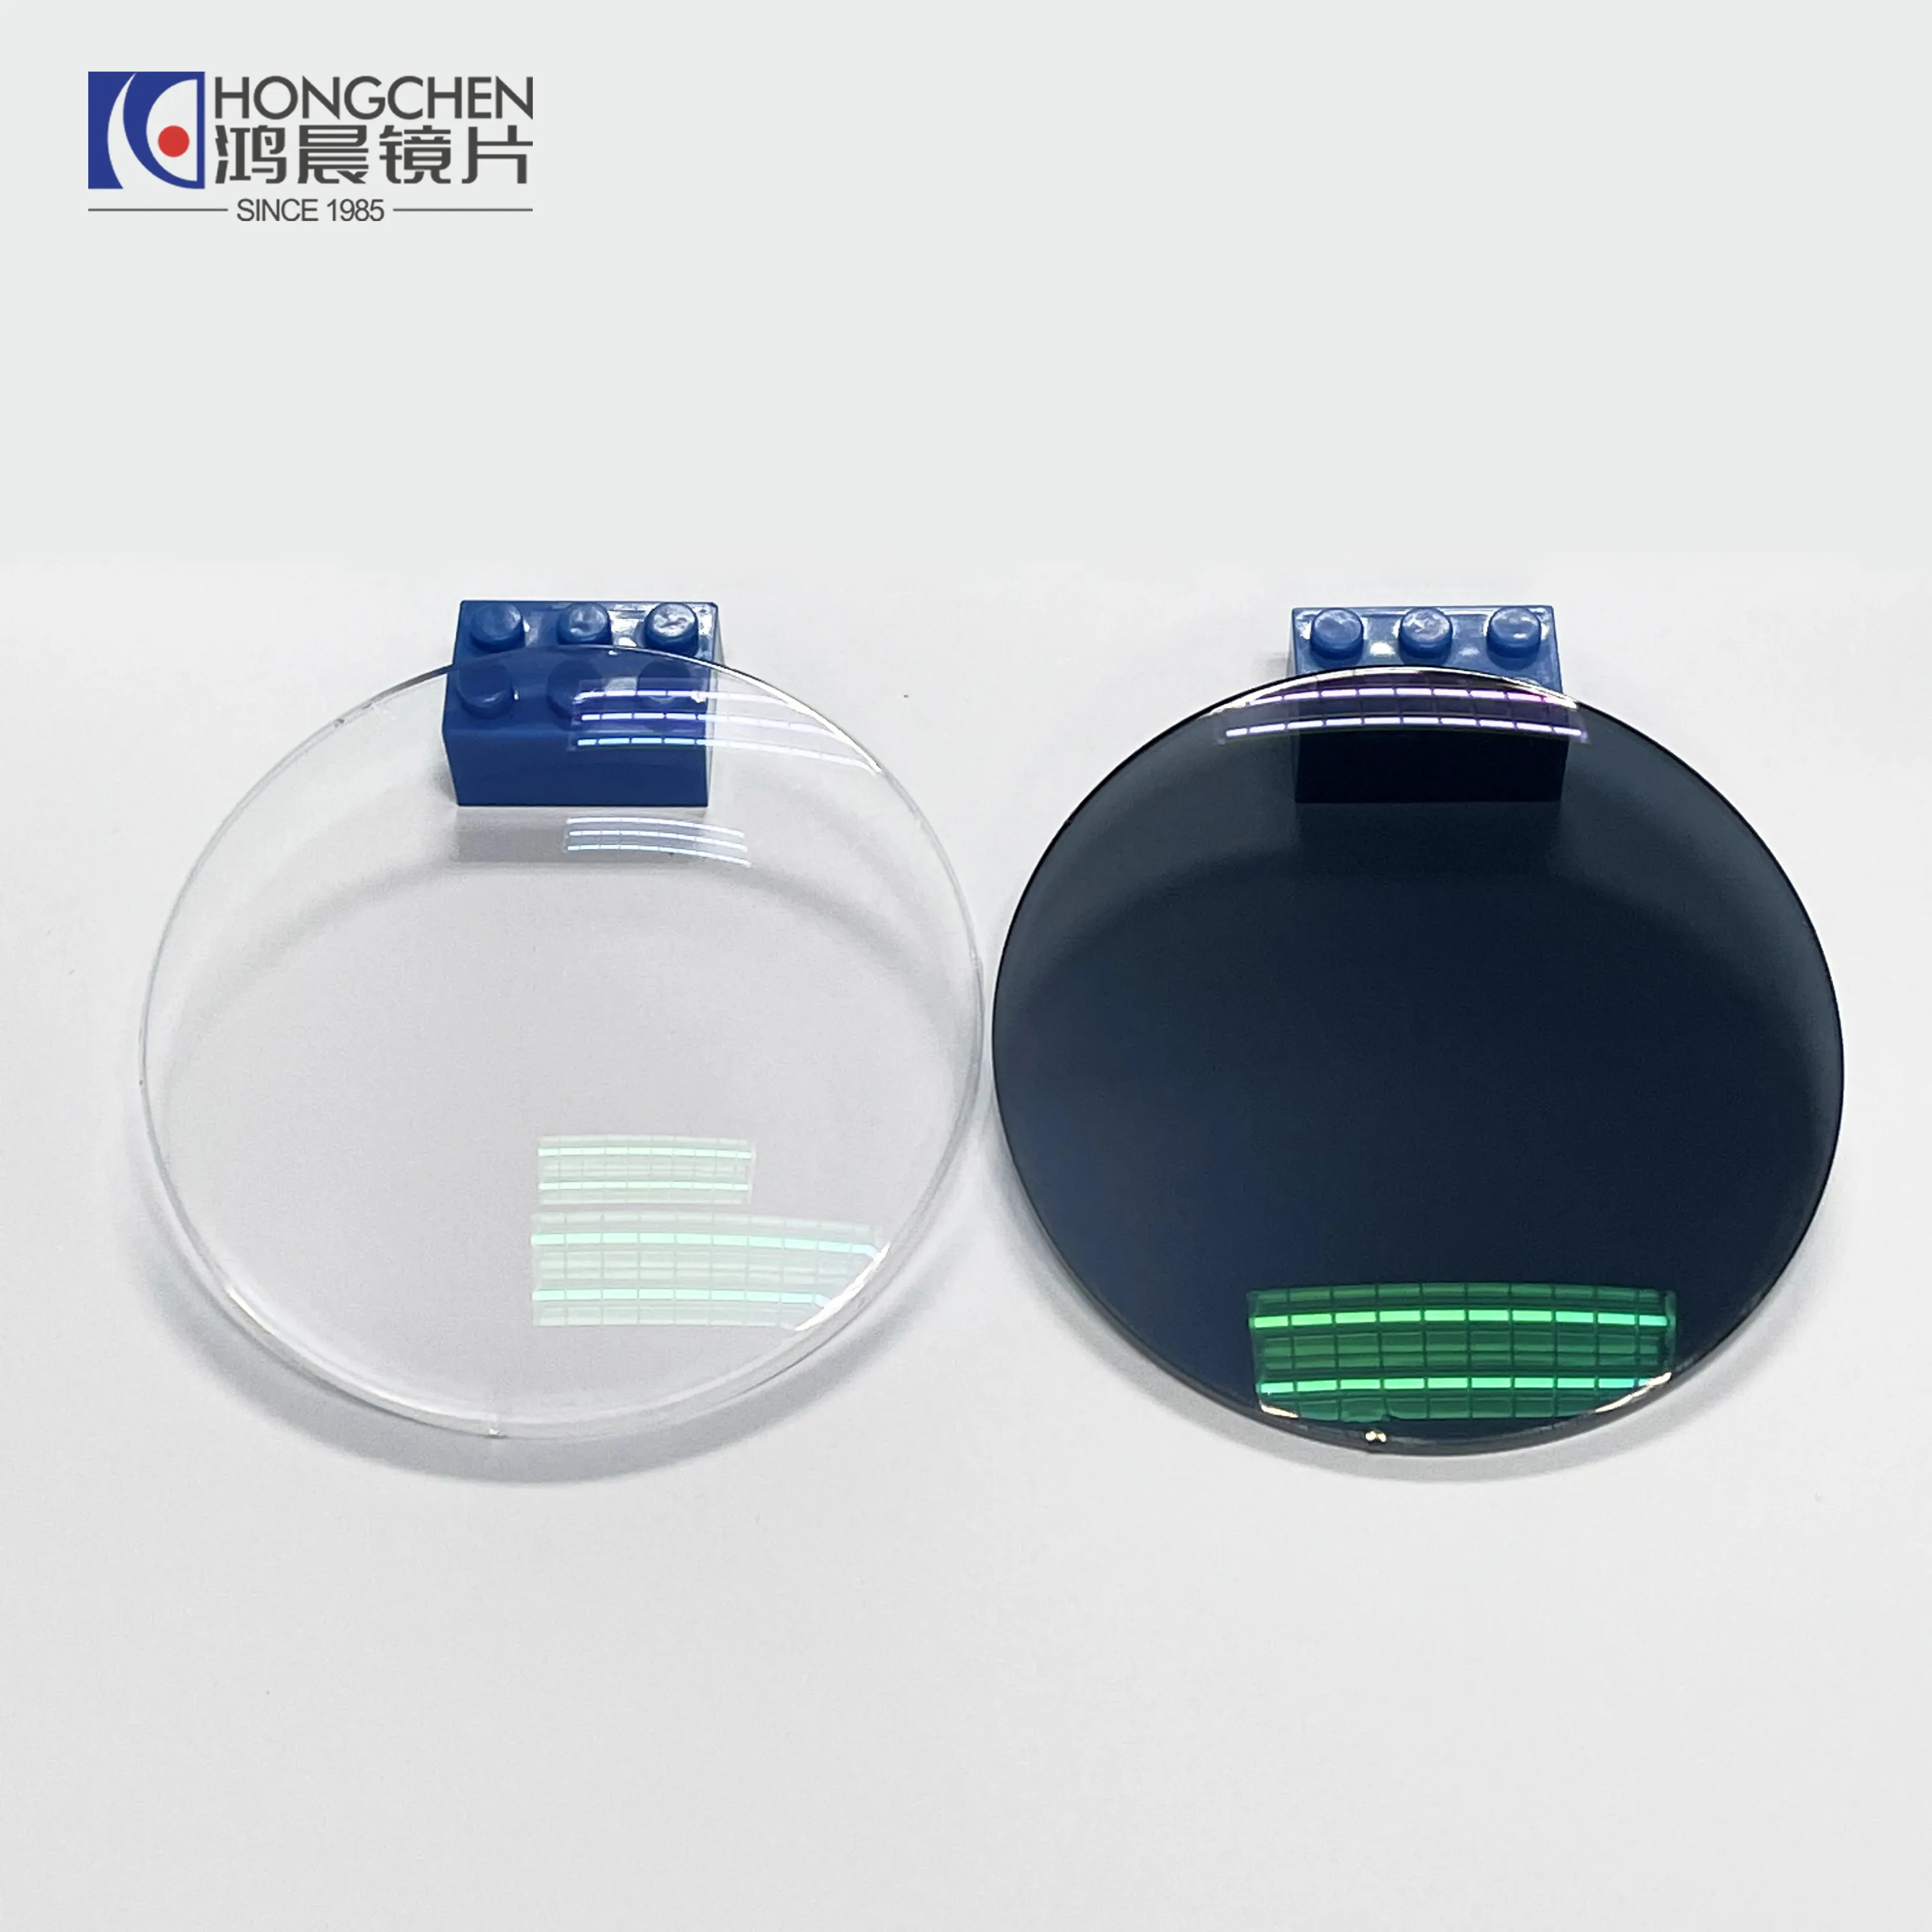 Hongchen produsen lensa optik Anti cahaya biru, CR39 lapisan putar photoromik biru lensa optik luar ruangan